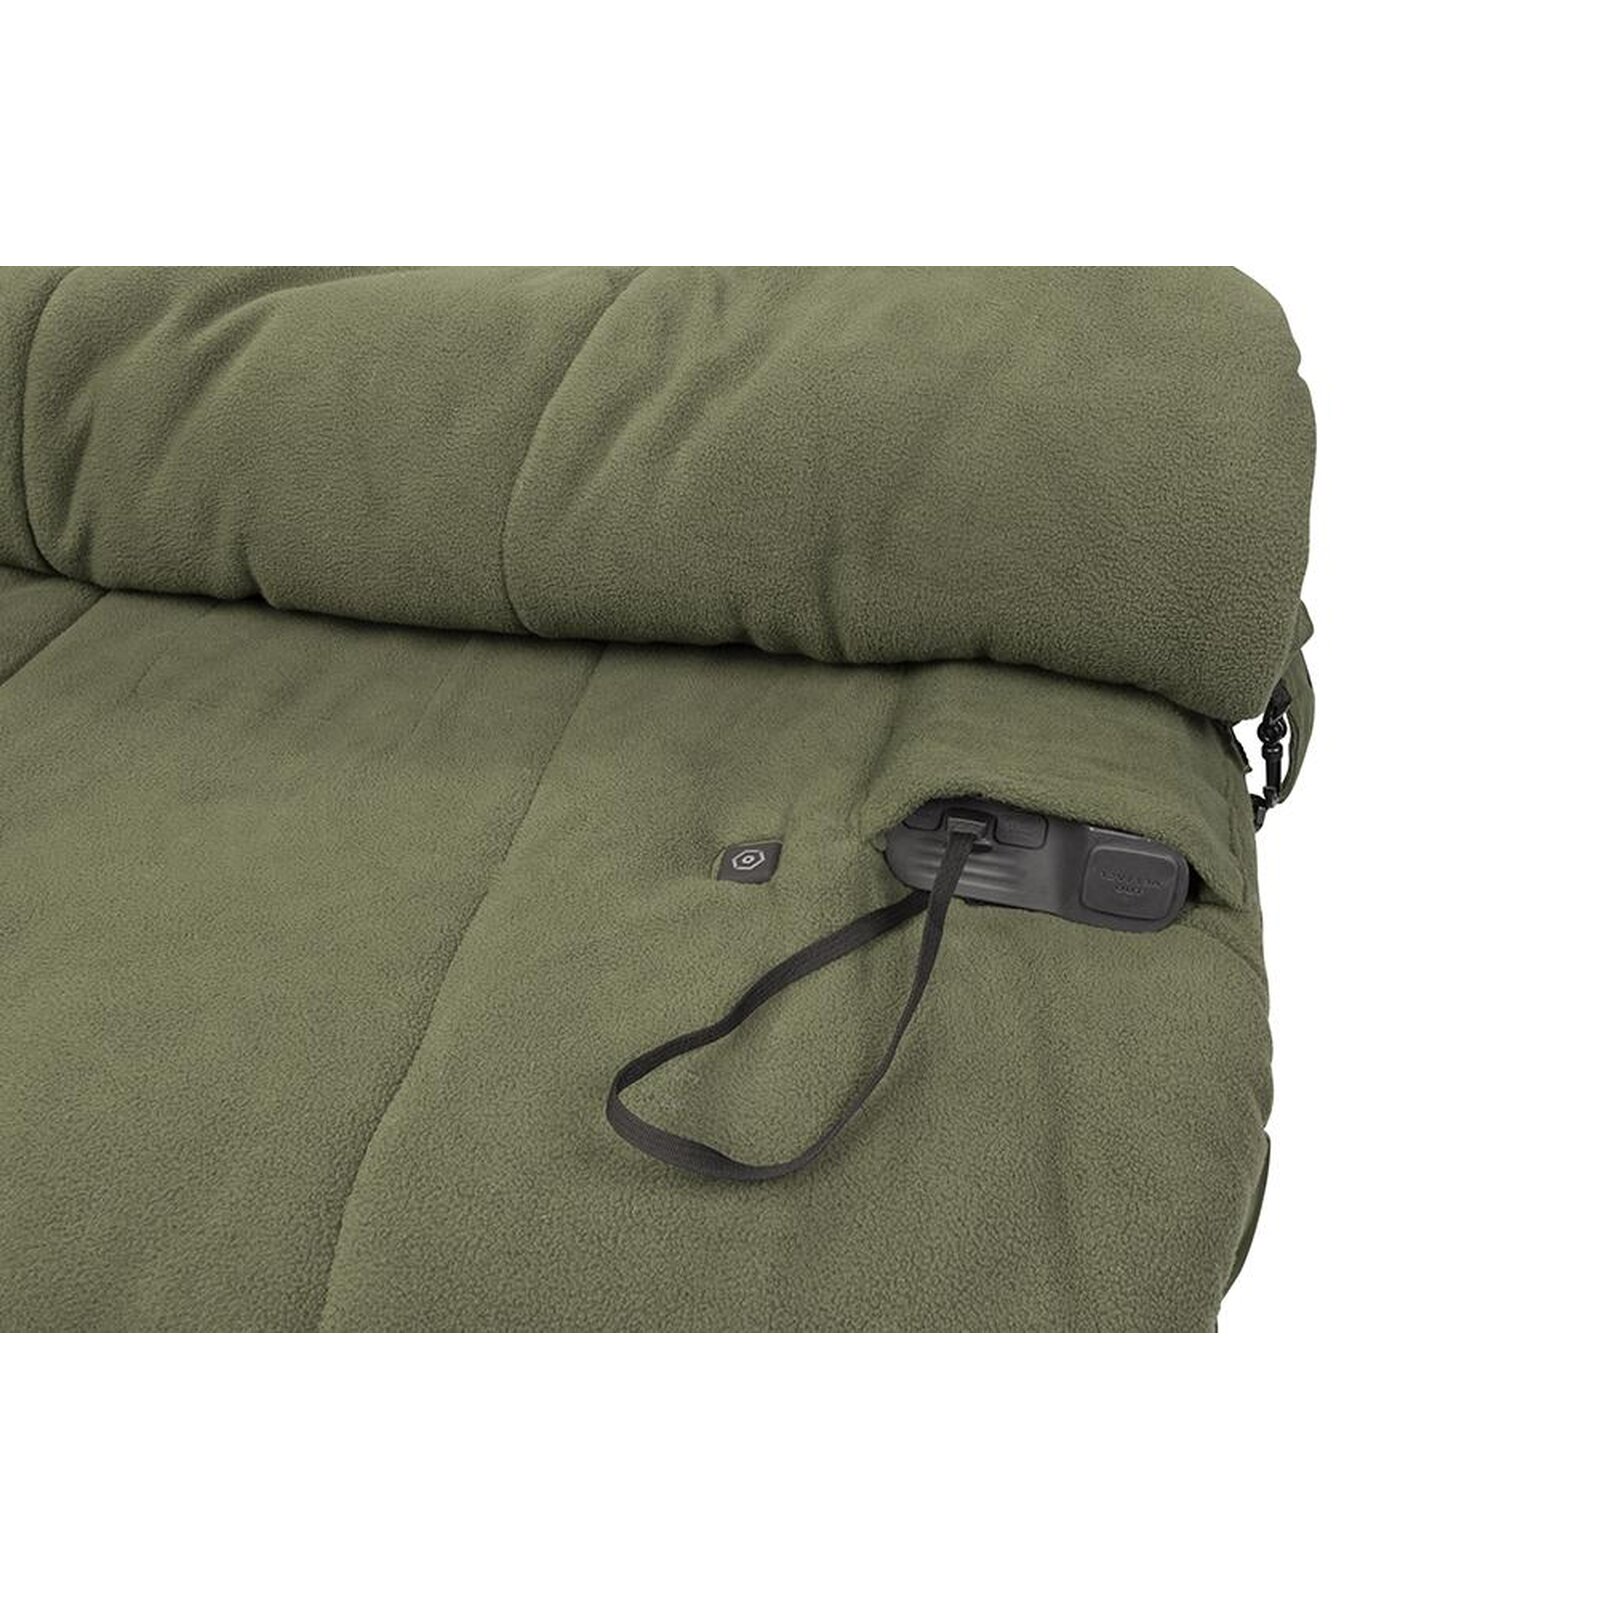 Avid Carp Thermatech Heated Sleeping Bag - Standard